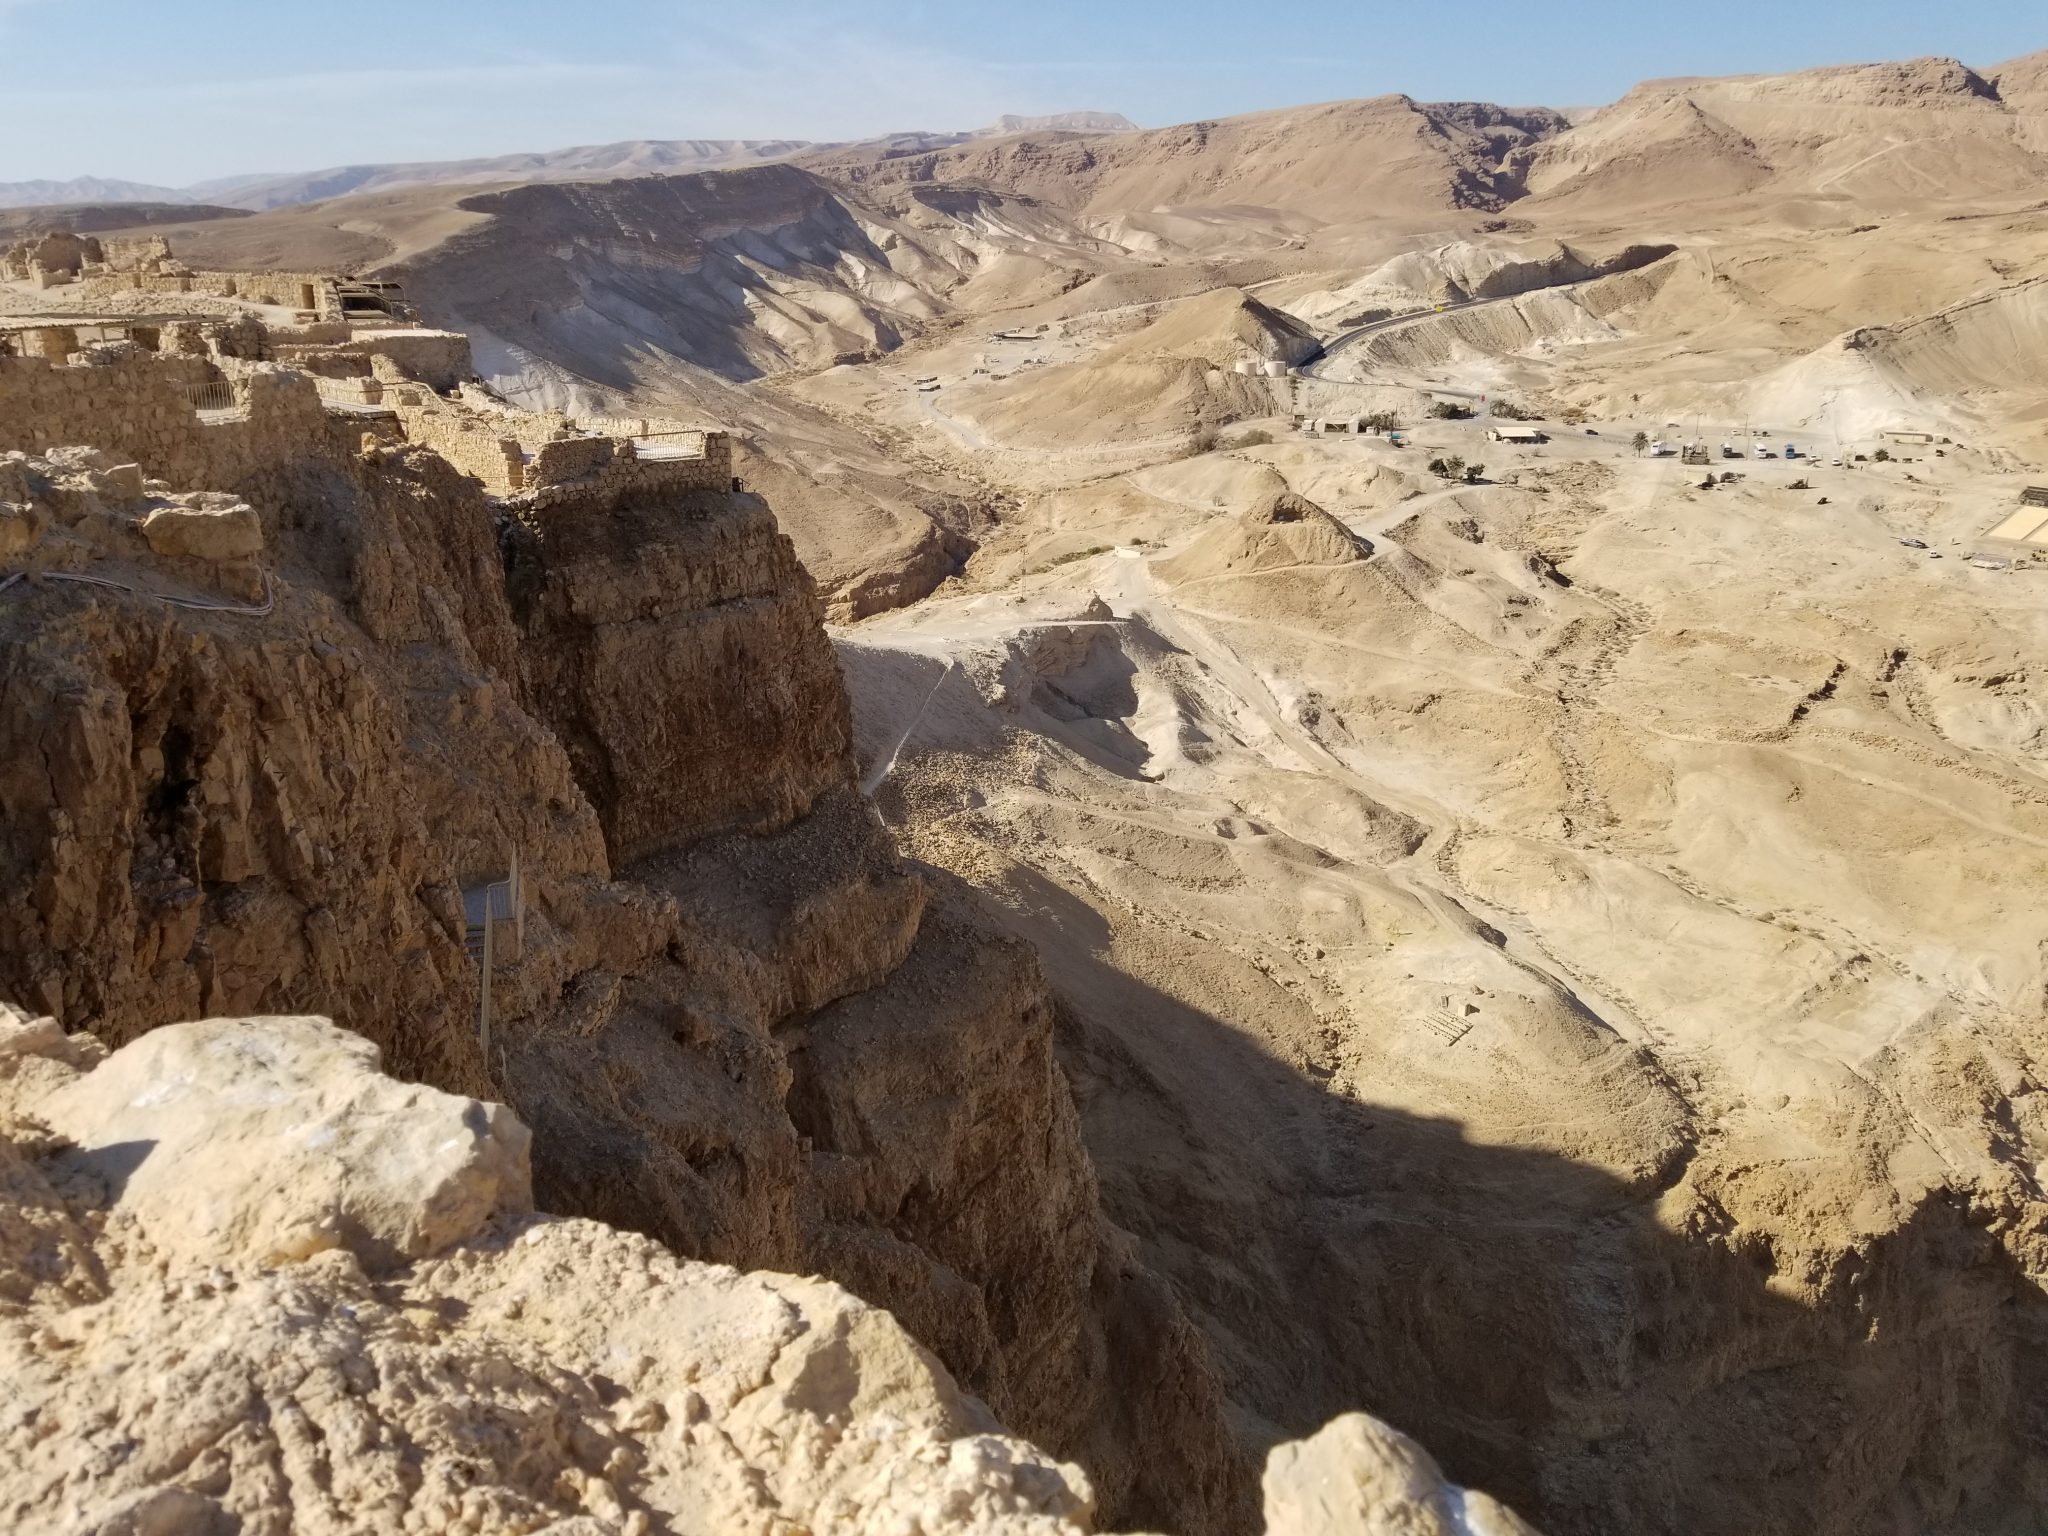 Roman ramp used to assault Jews in Masada